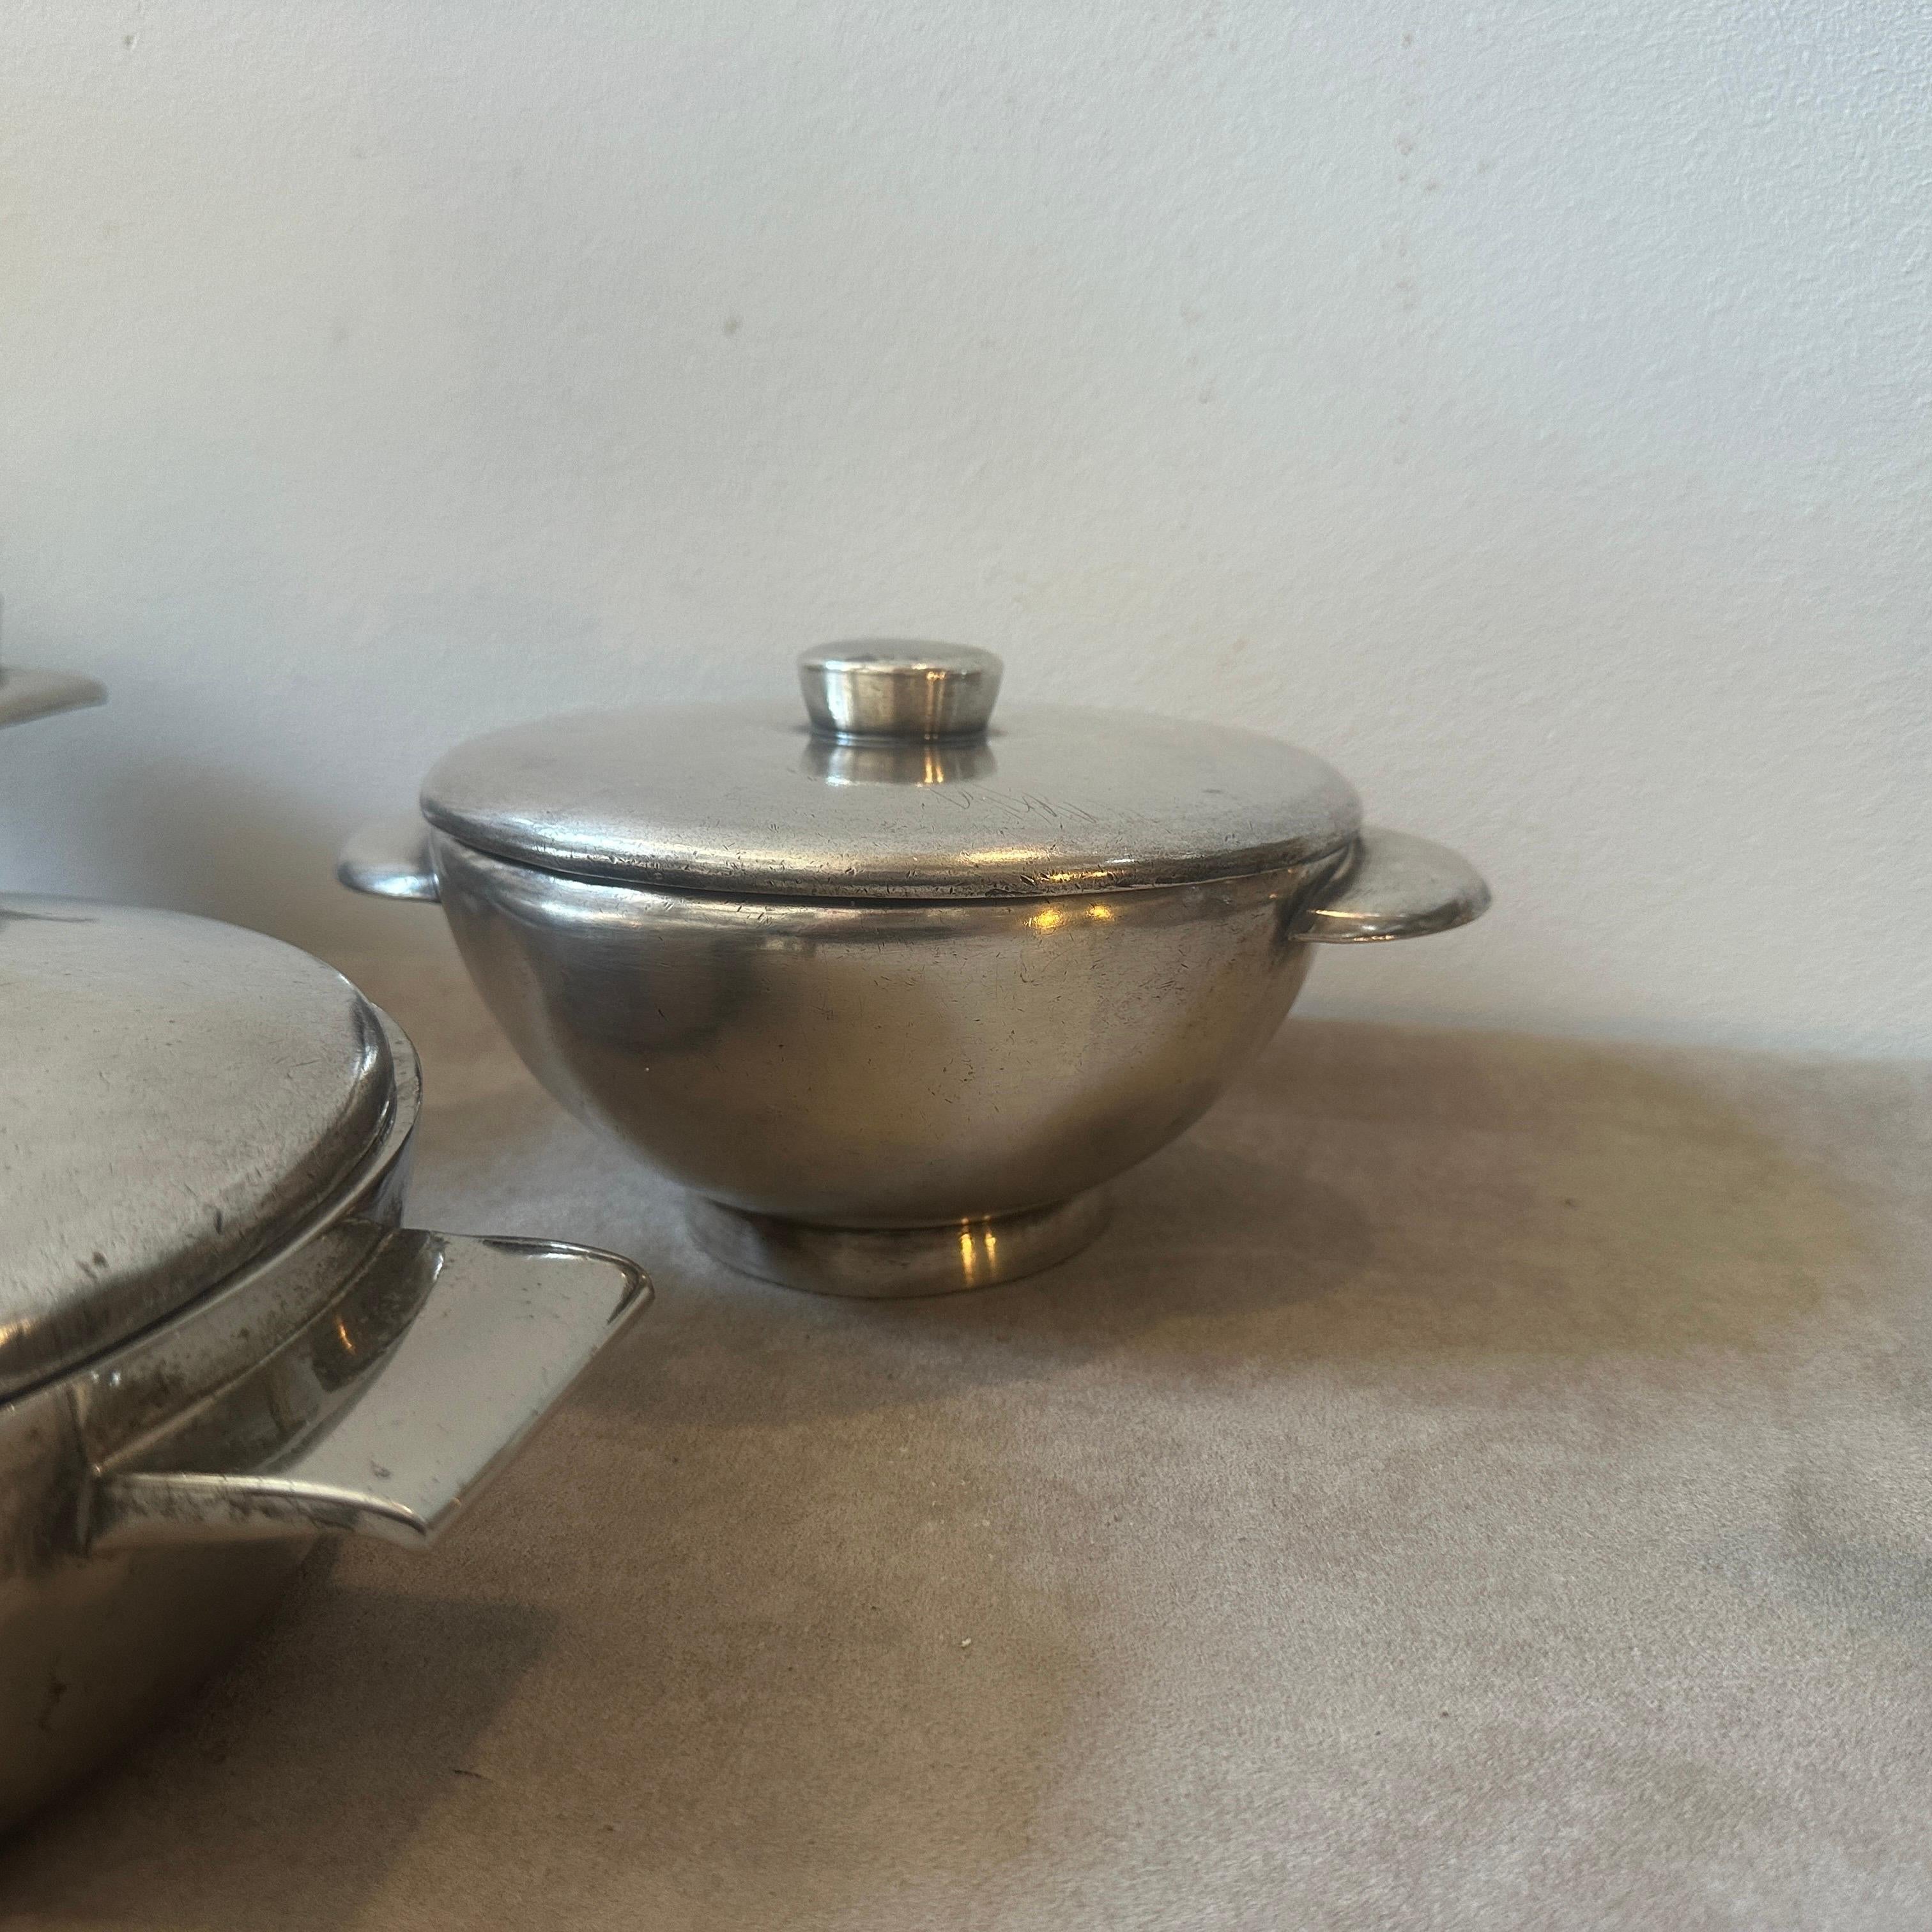 Three 1950s Alpaca Serving Bowls Designed by Gio Ponti for Fratelli Calderoni In Good Condition For Sale In Aci Castello, IT